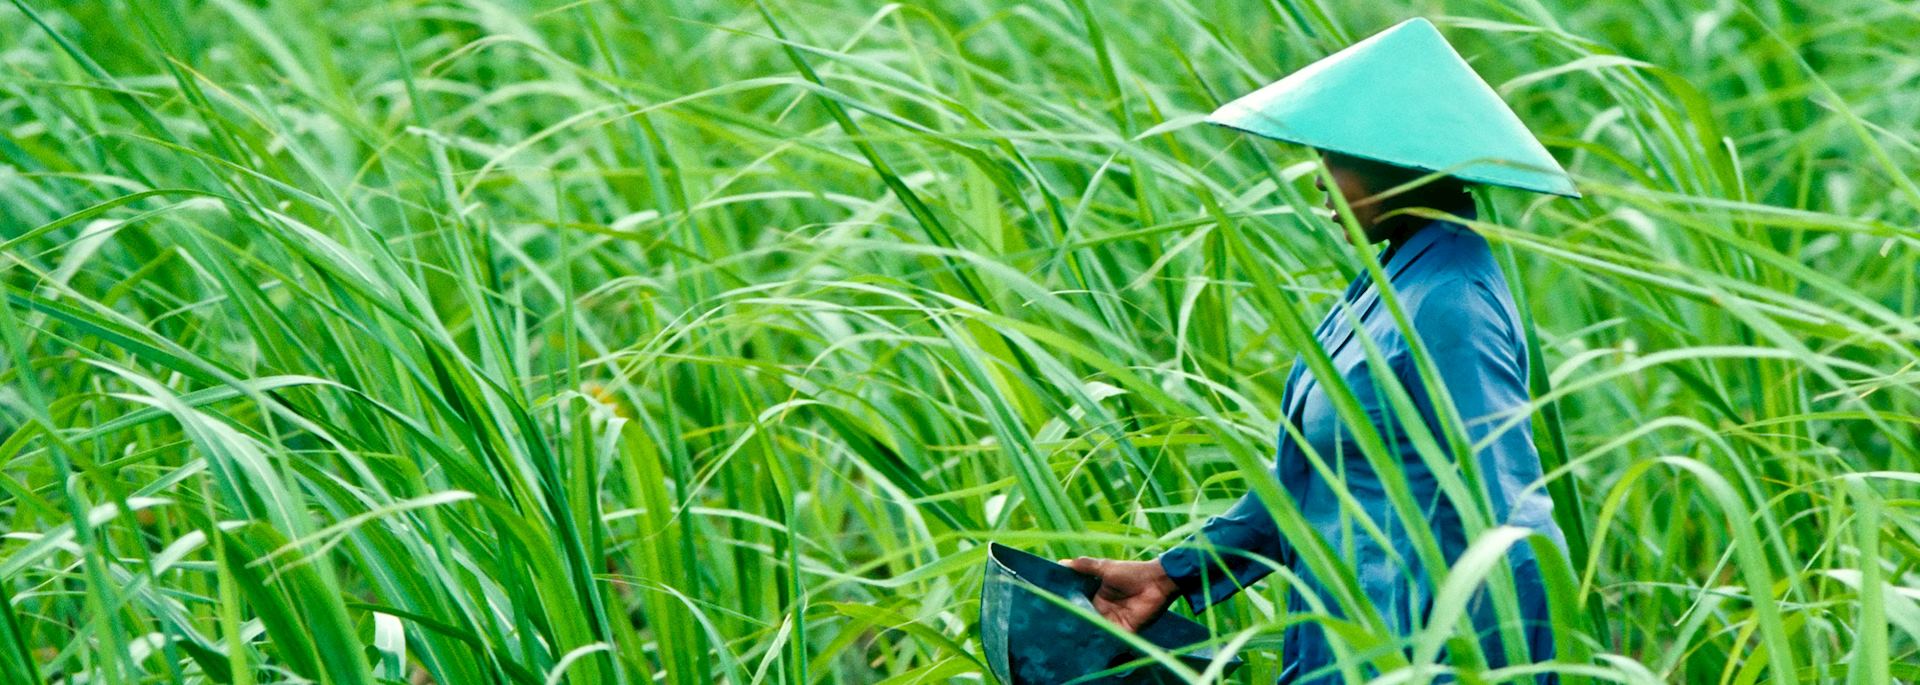 Fertilising a rice field in Vietnam